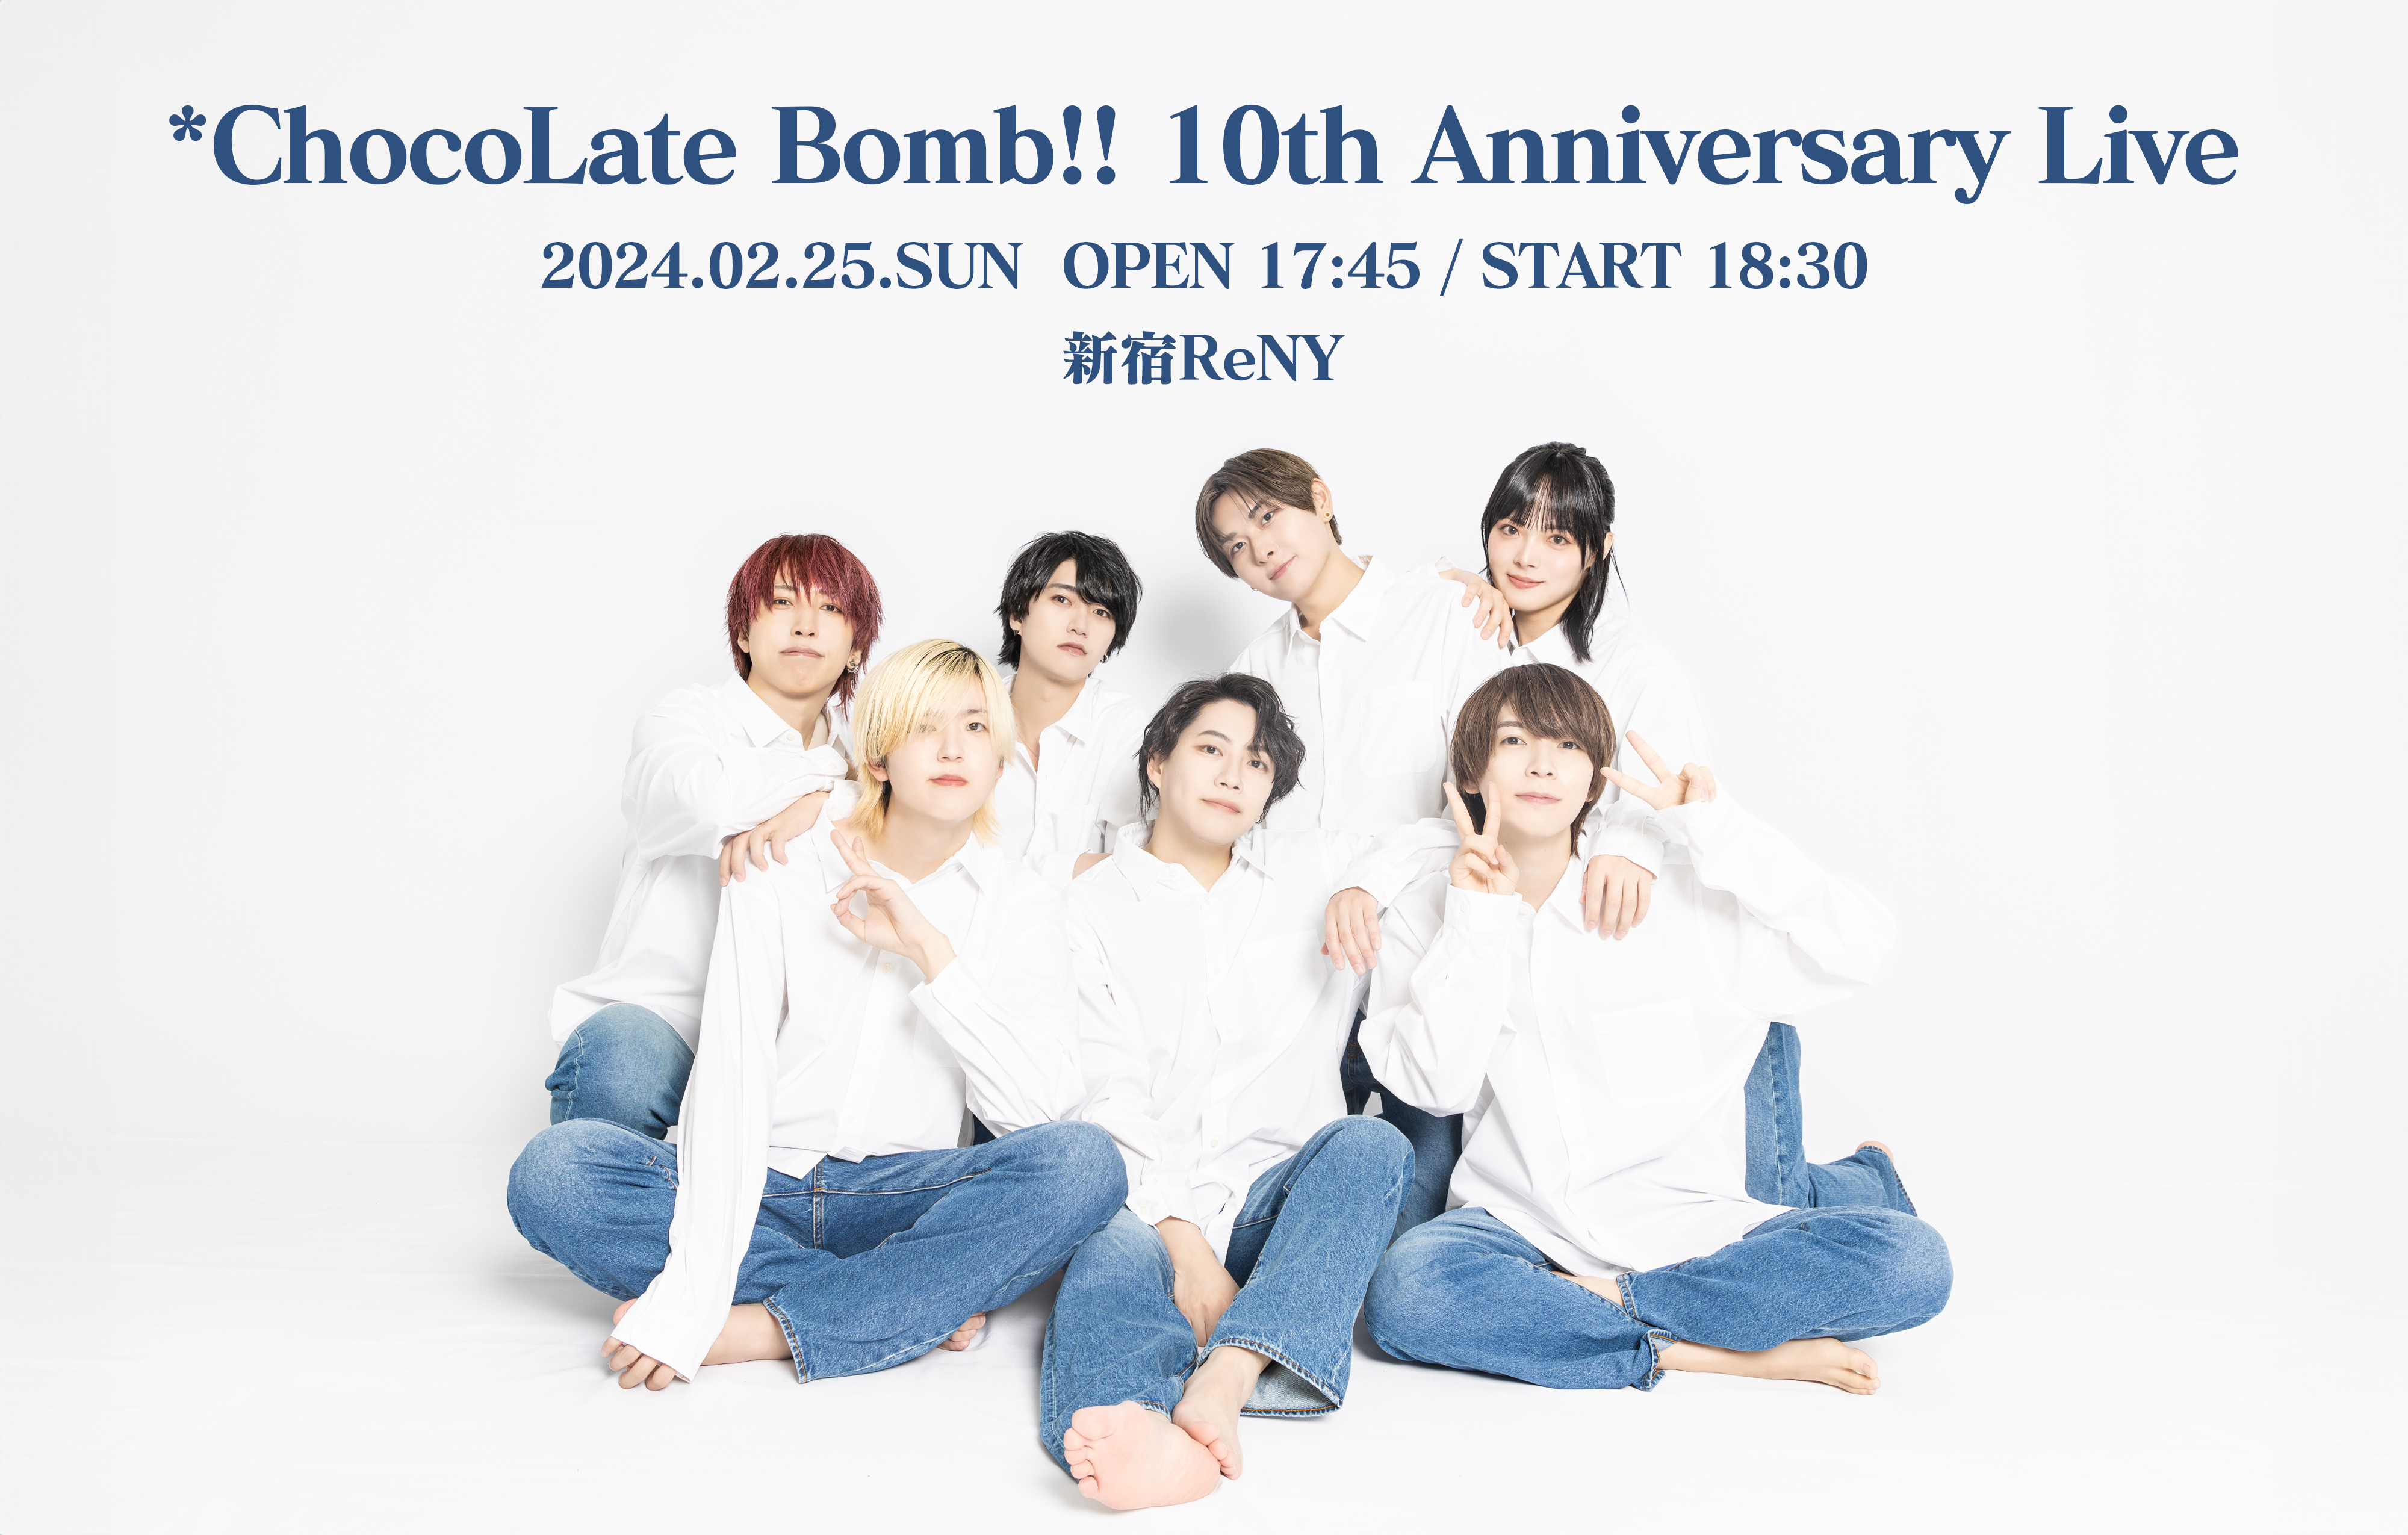 2/25】*ChocoLate Bomb!! 10th Anniversary Live | *ChocoLate Bomb 